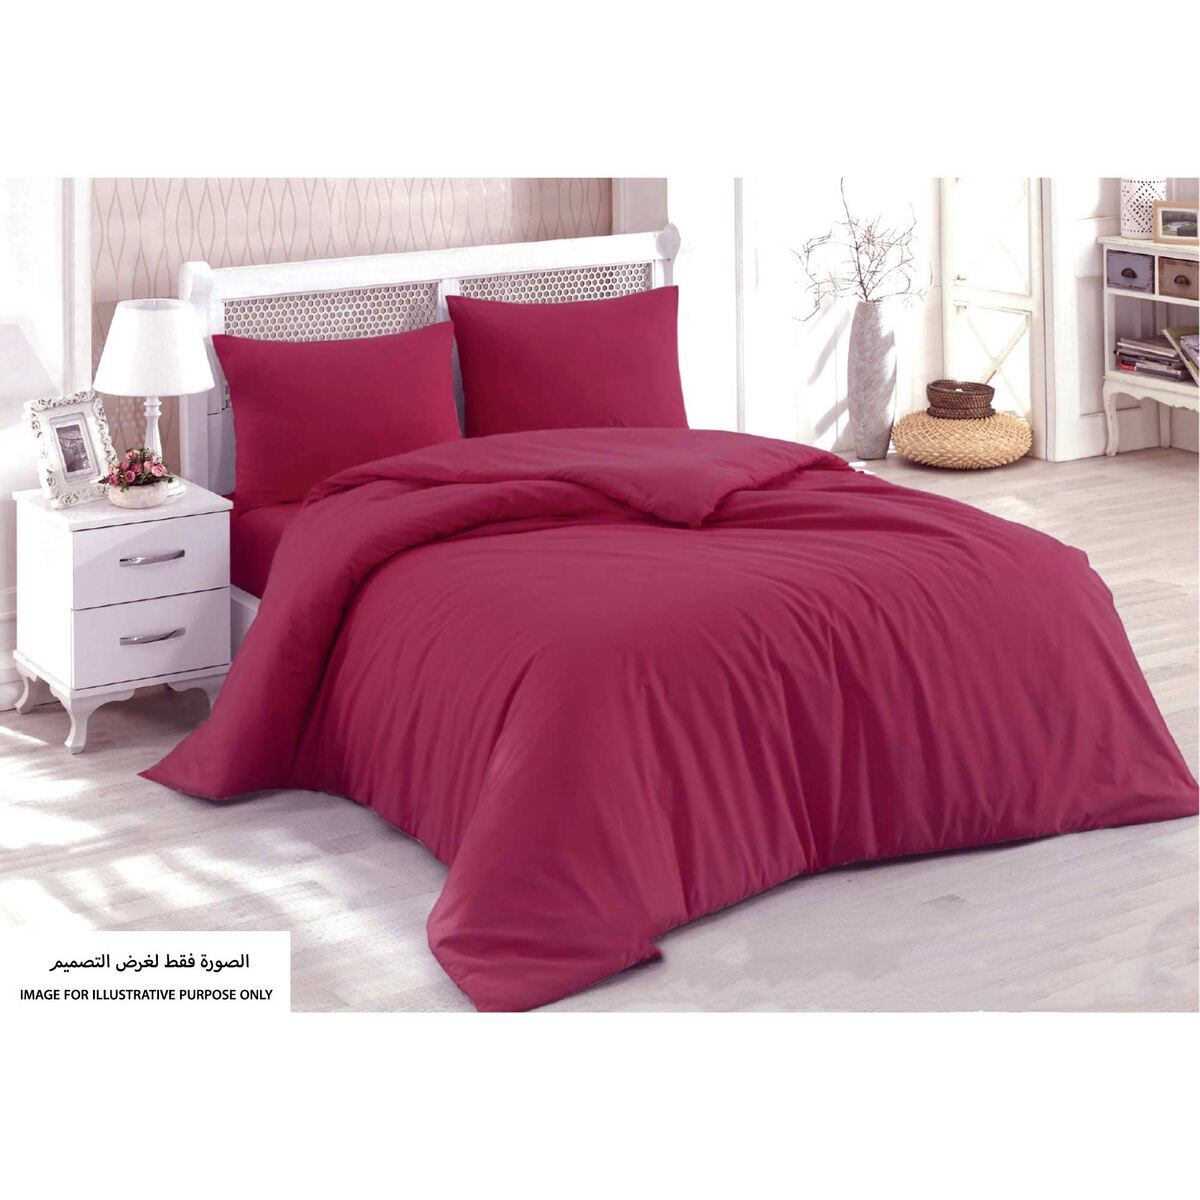 Homewell Single Comforter 3pc Set Red